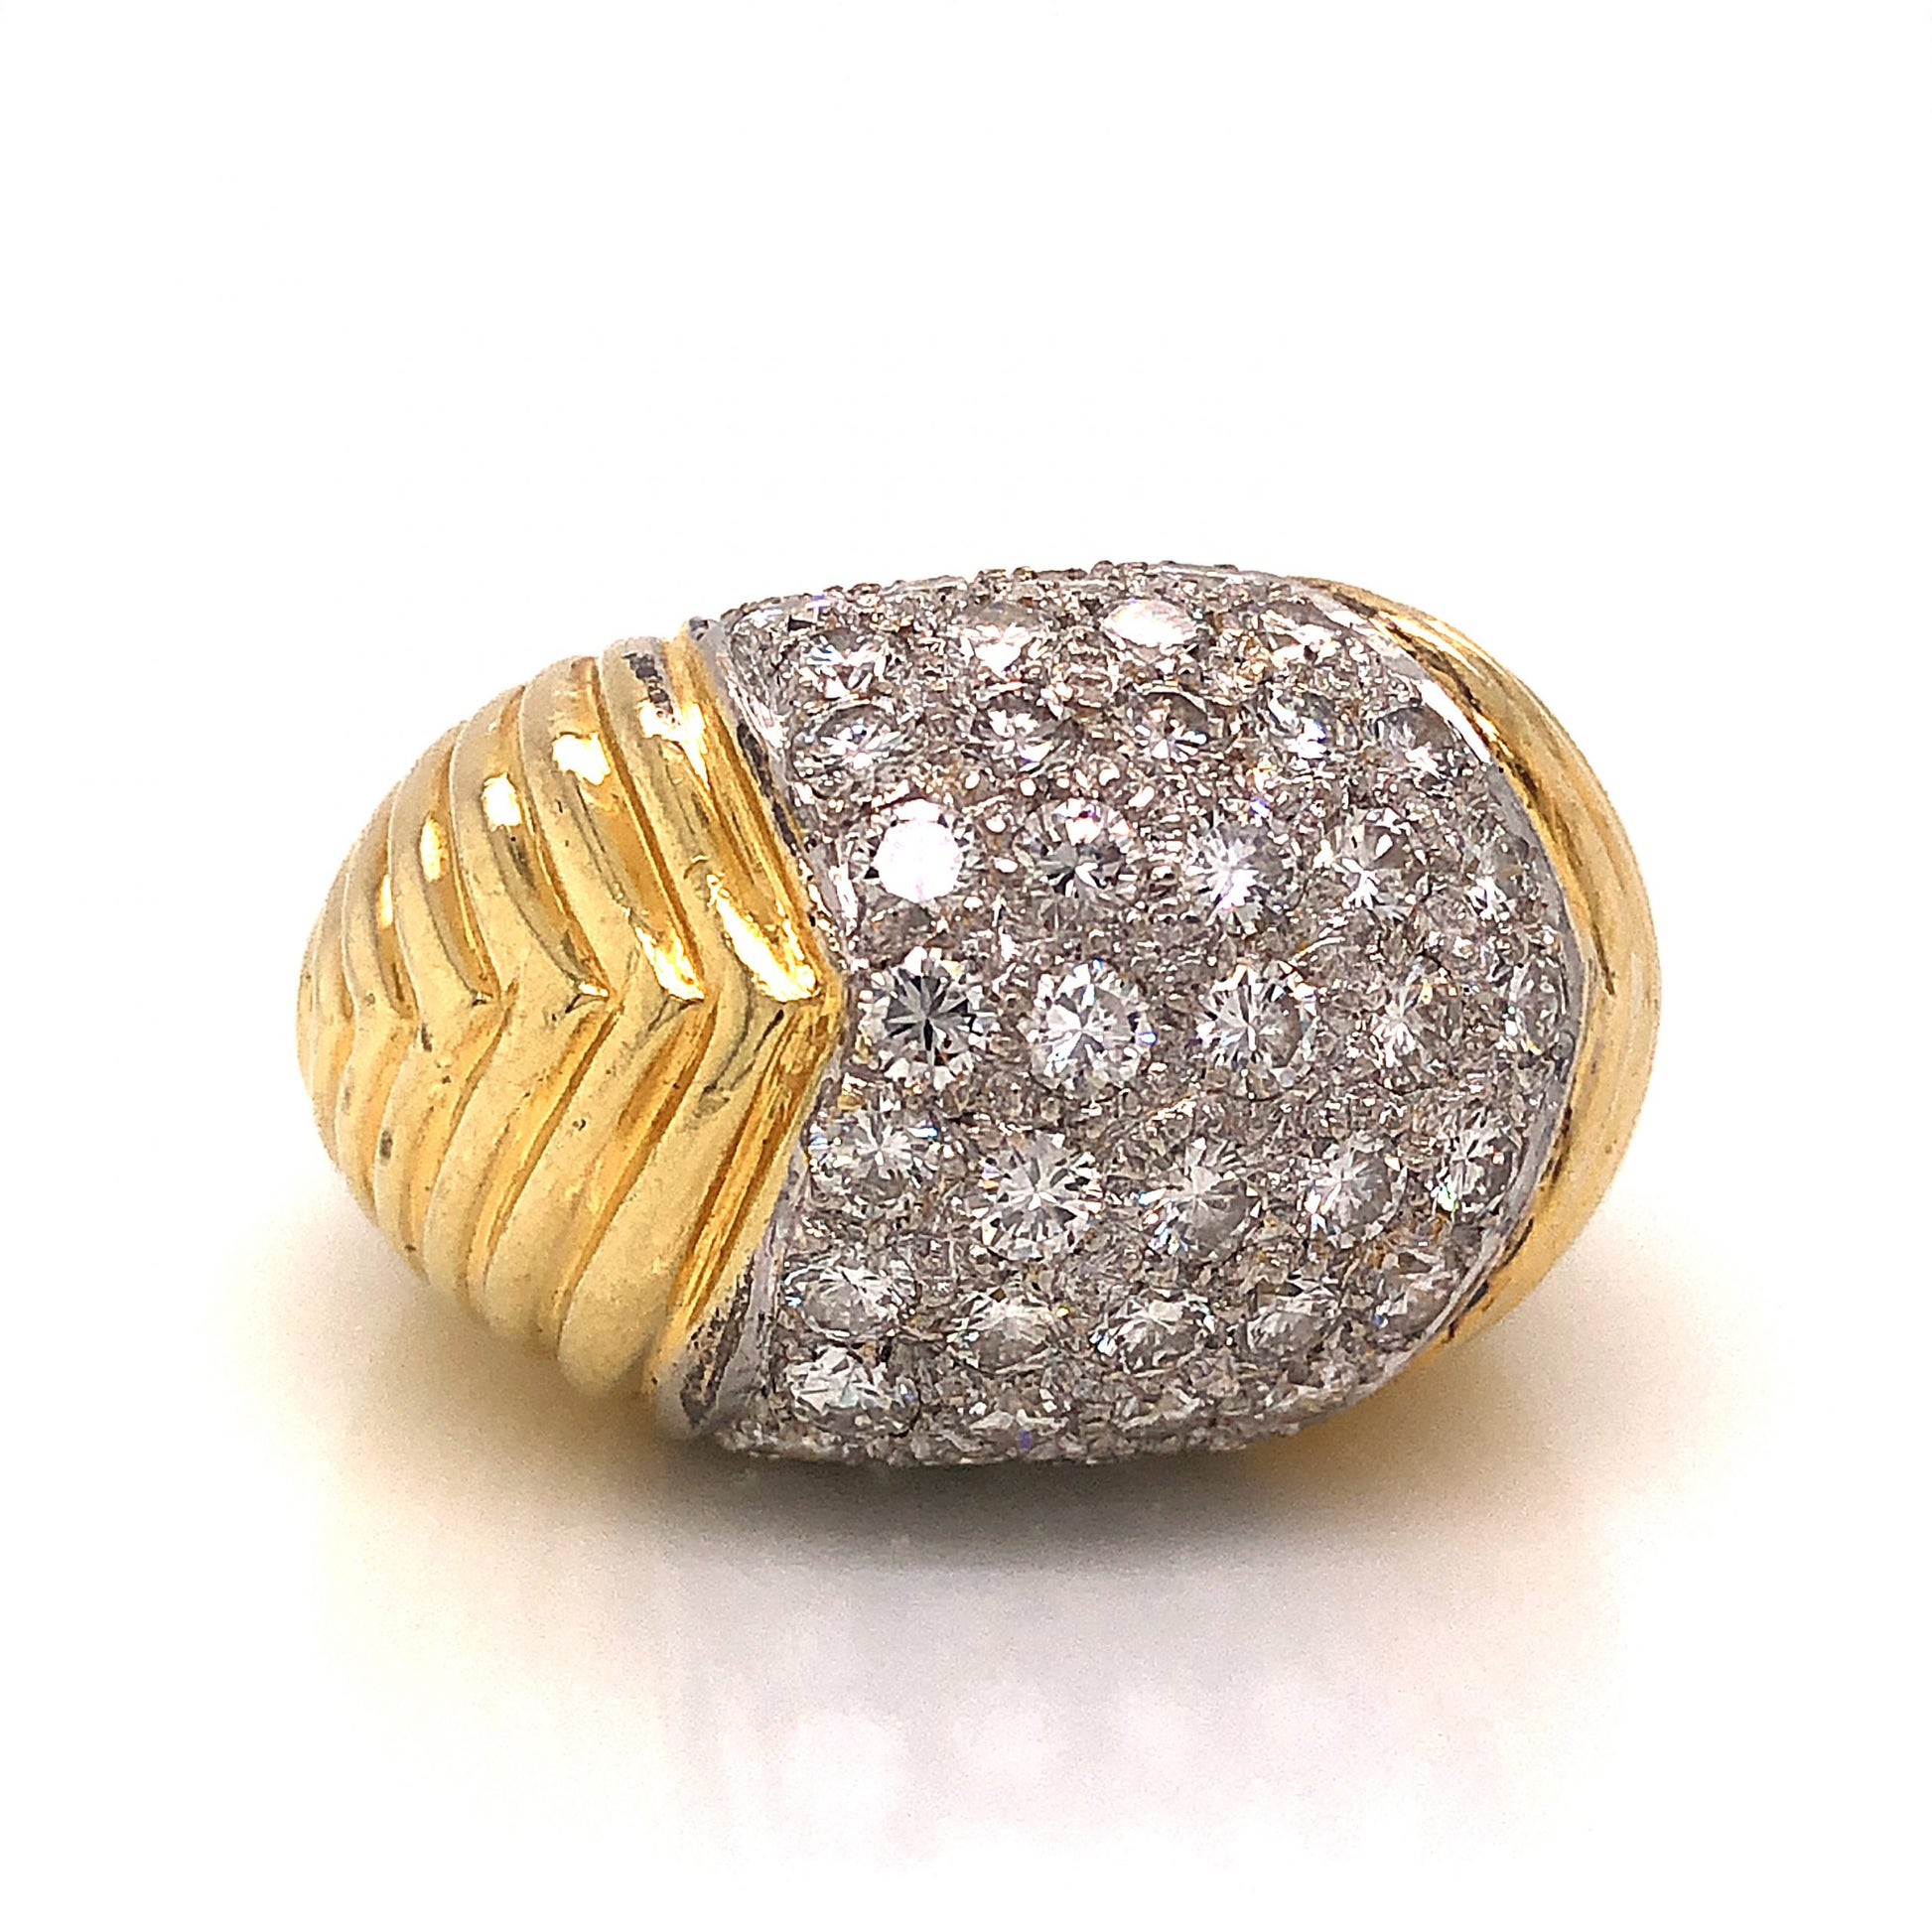 Textured Pave Diamond Cocktail Ring 18k Yellow GoldComposition: 18 Karat White Gold/18 Karat Yellow Gold Ring Size: 8.75 Total Diamond Weight: 3.30ct Total Gram Weight: 25.75 g